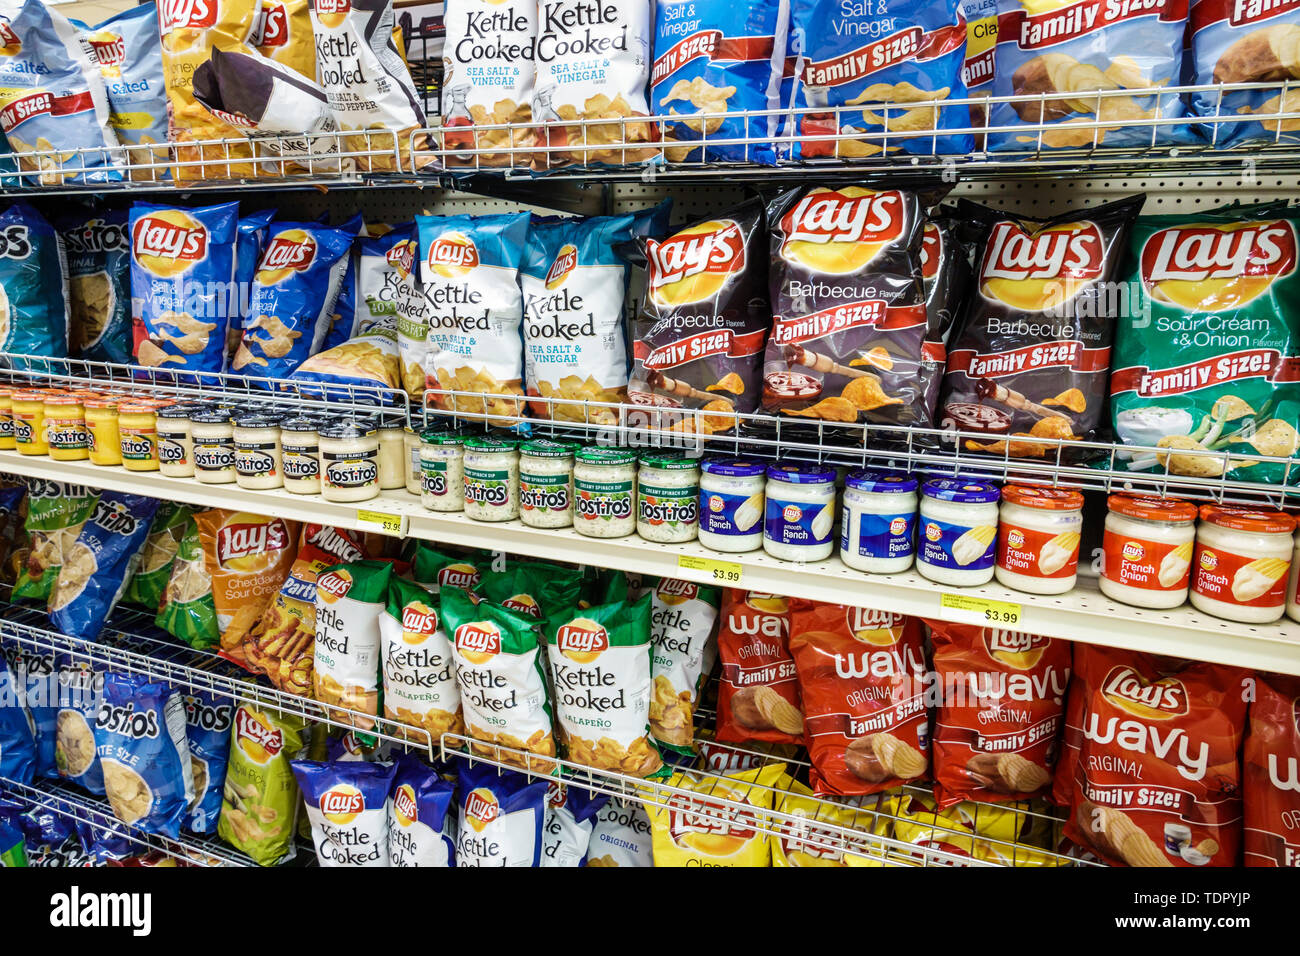 Sanibel Island Florida,Jerry's Foods,grocery store supermarket,inside interior,shelves display sale,snacks,potato chips,crisps,Lays,brand,junk food,vi Stock Photo